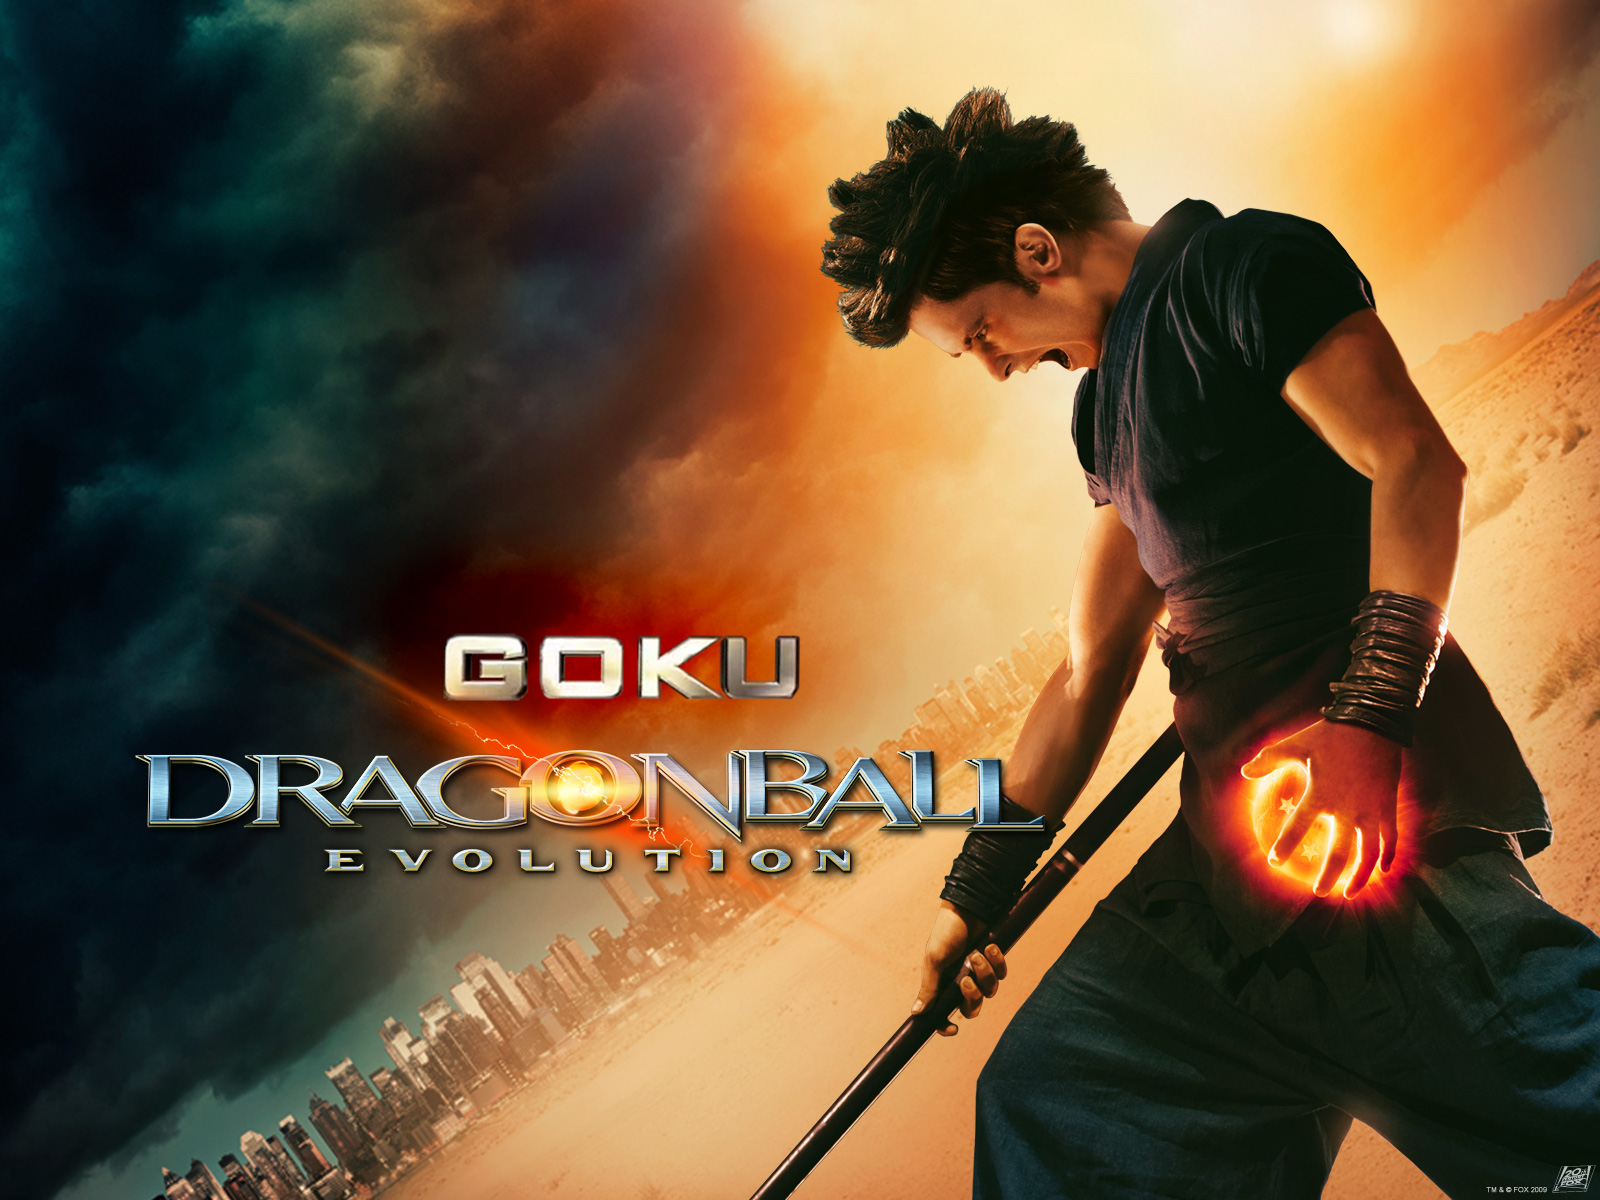 Previous, Movies - Movies D - Dragonball Goku wallpaper